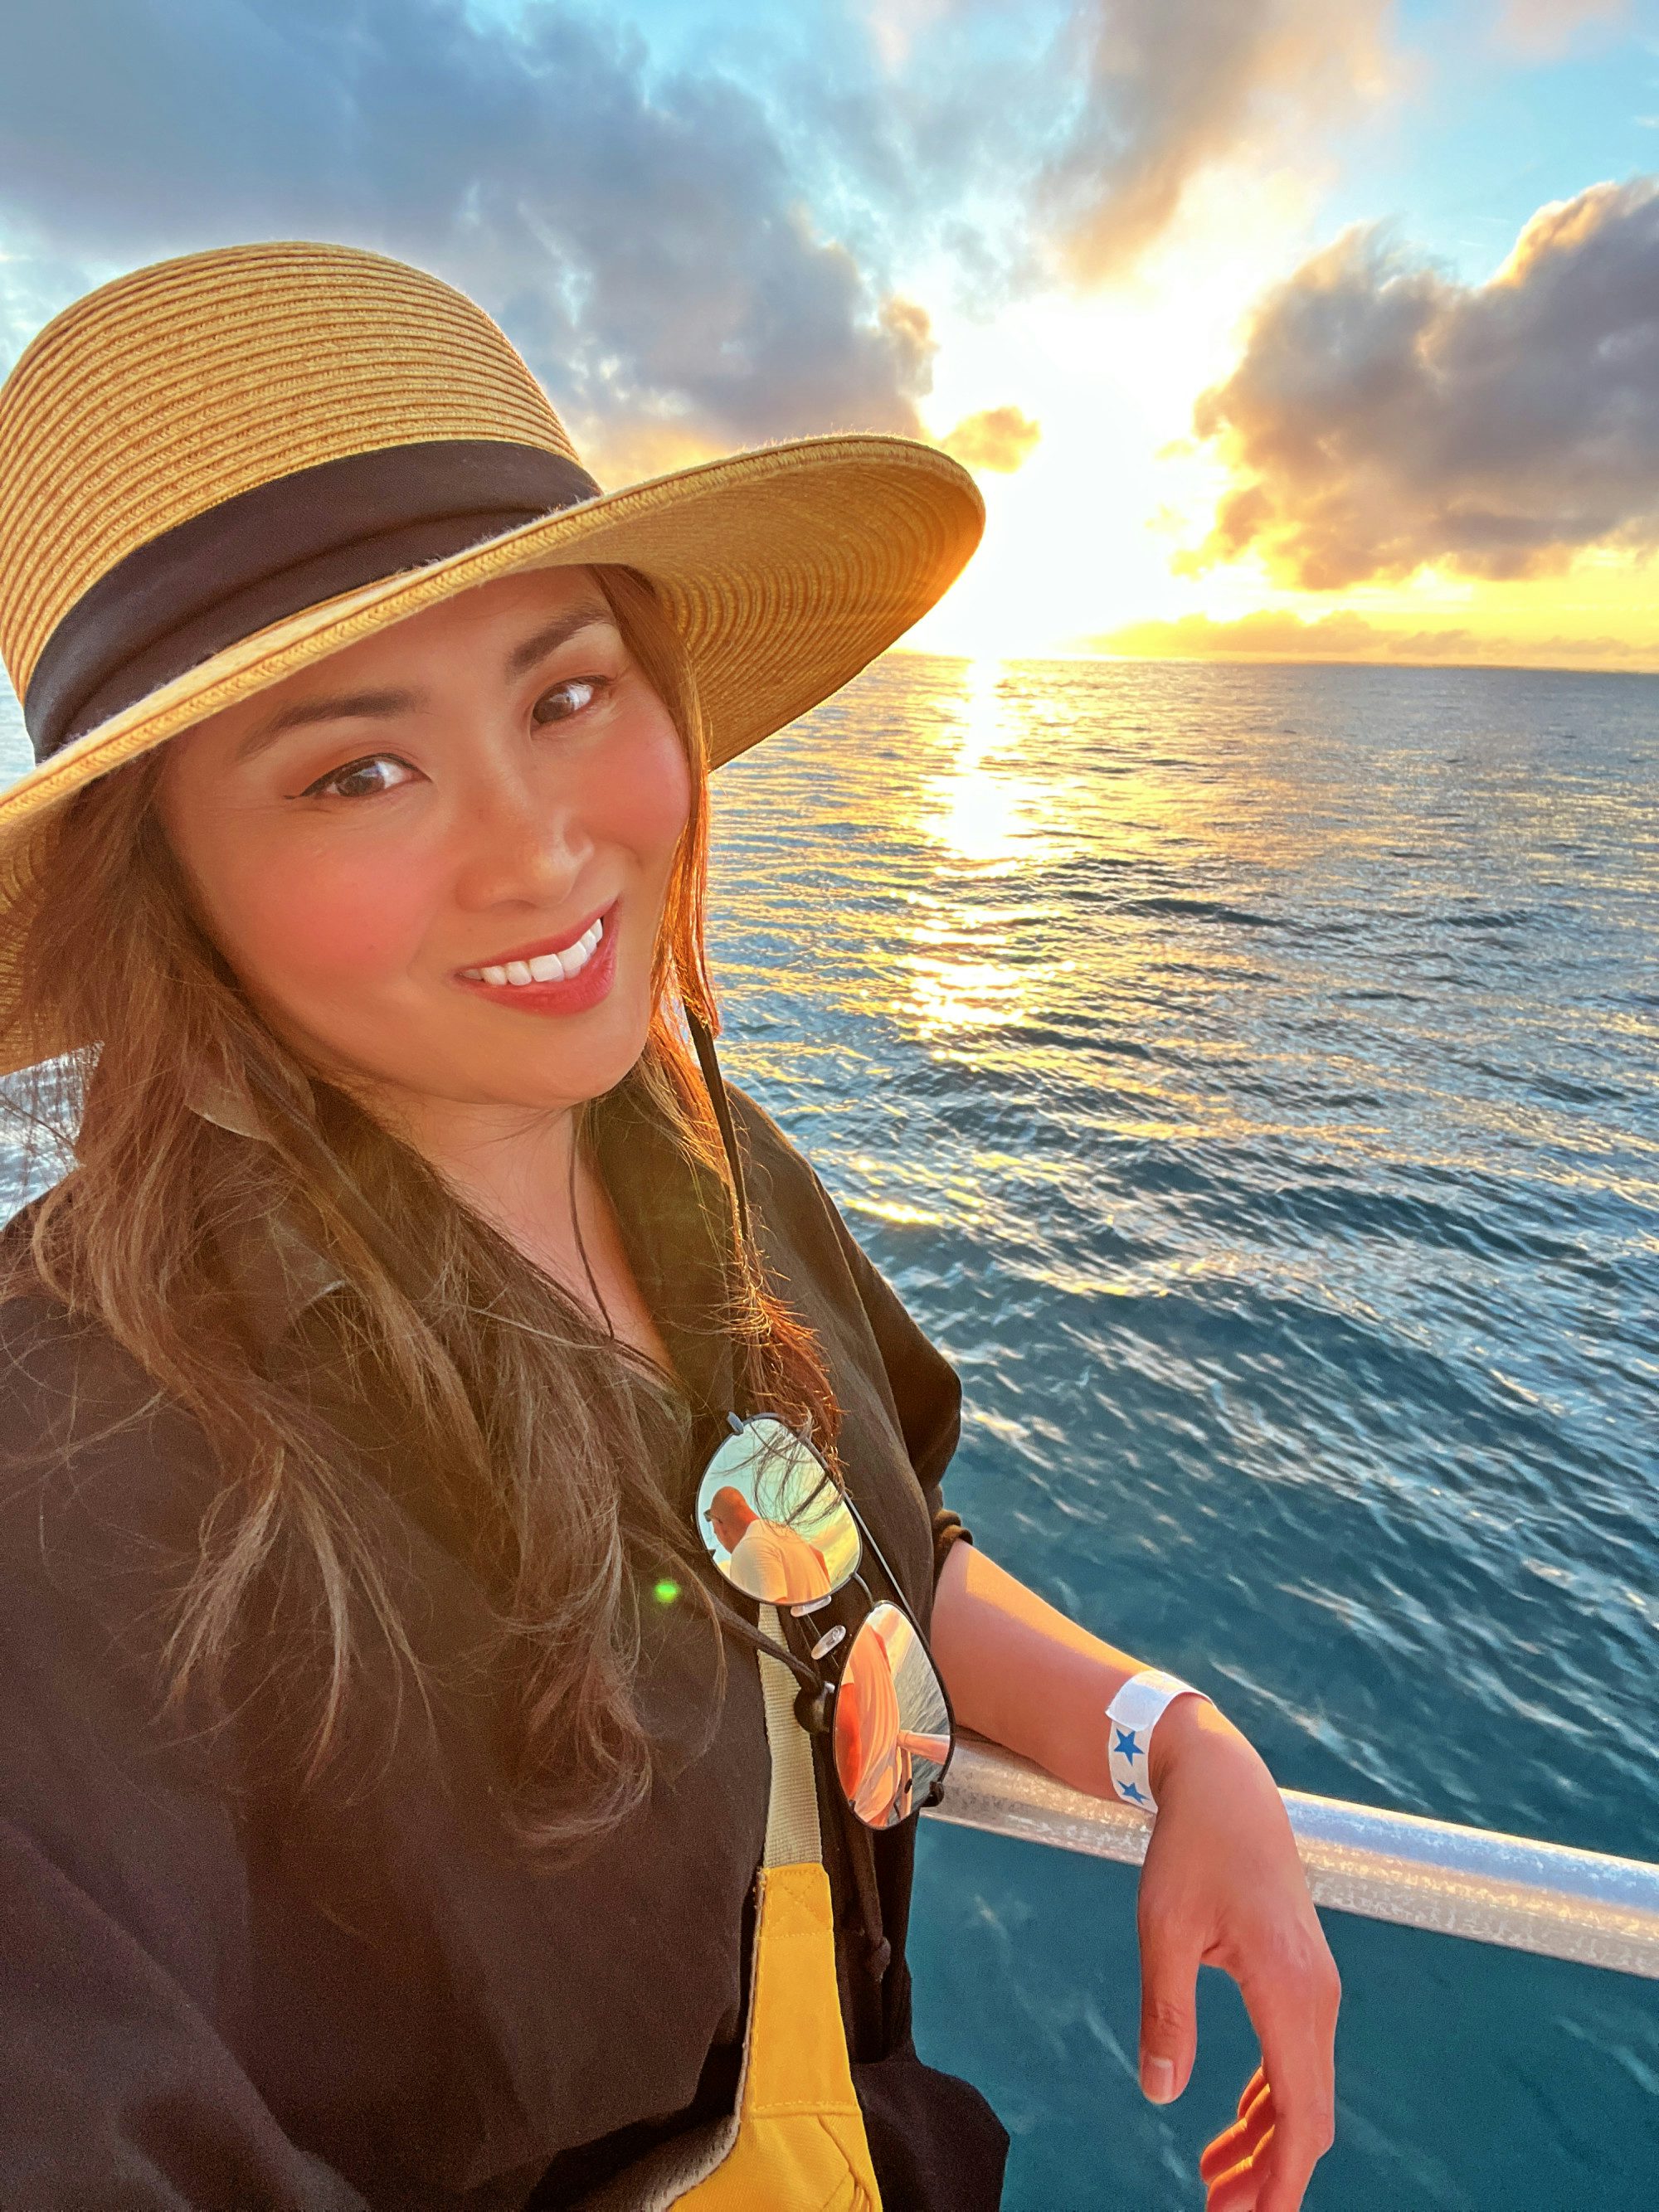 Travel Advisor Cheska Tariga leans on the railing of a boat cruising through the sunset wearing a sun hat